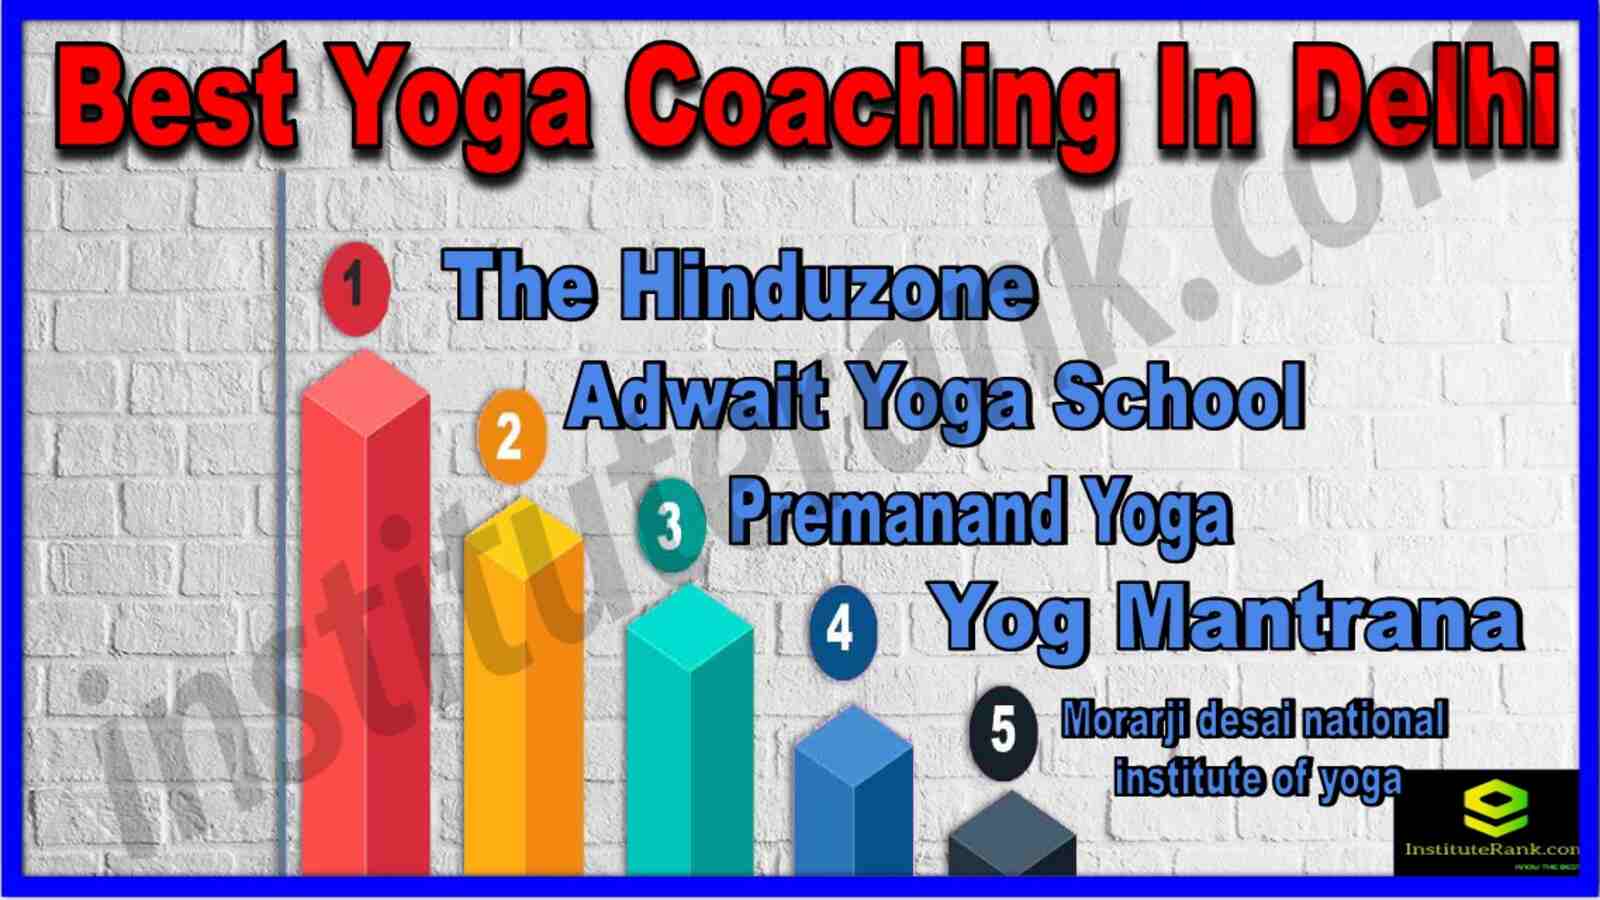 Best Yoga coaching in Delhi